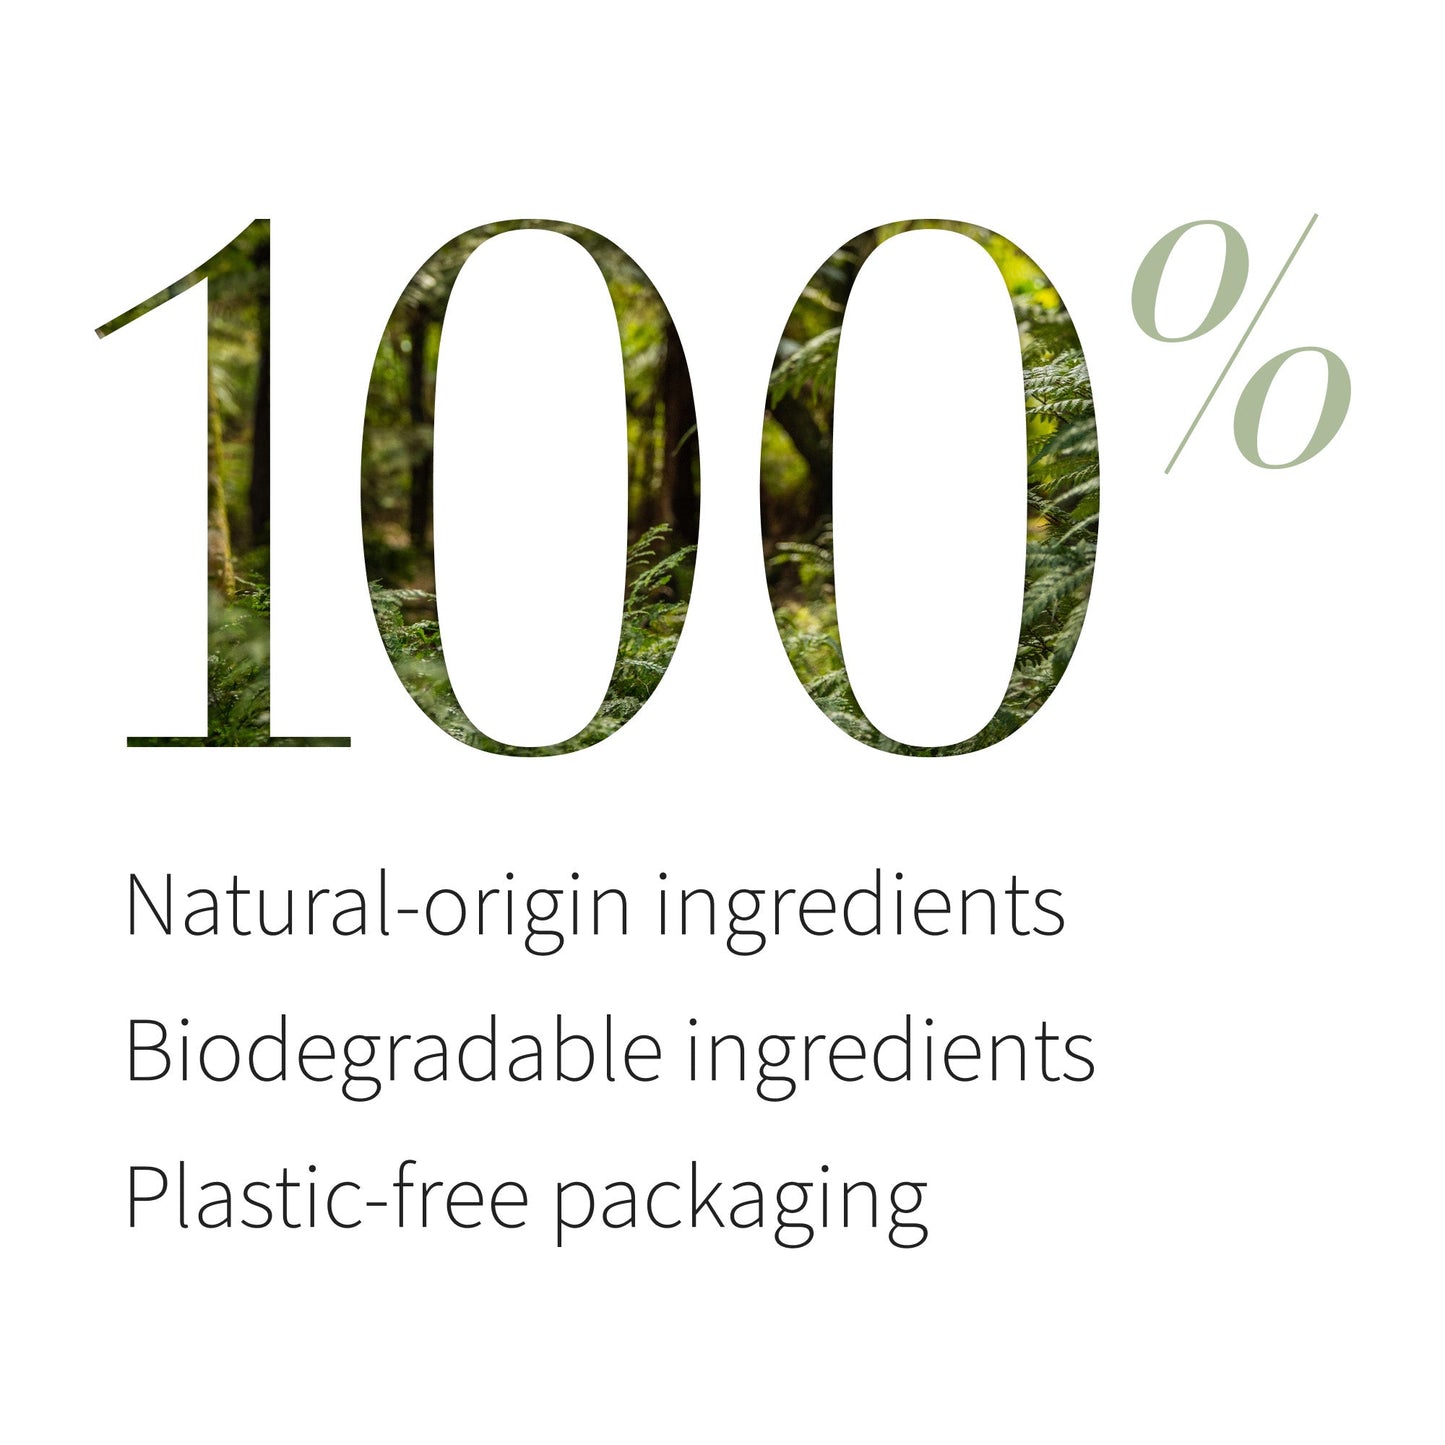 100% Natural-origin Ingredients